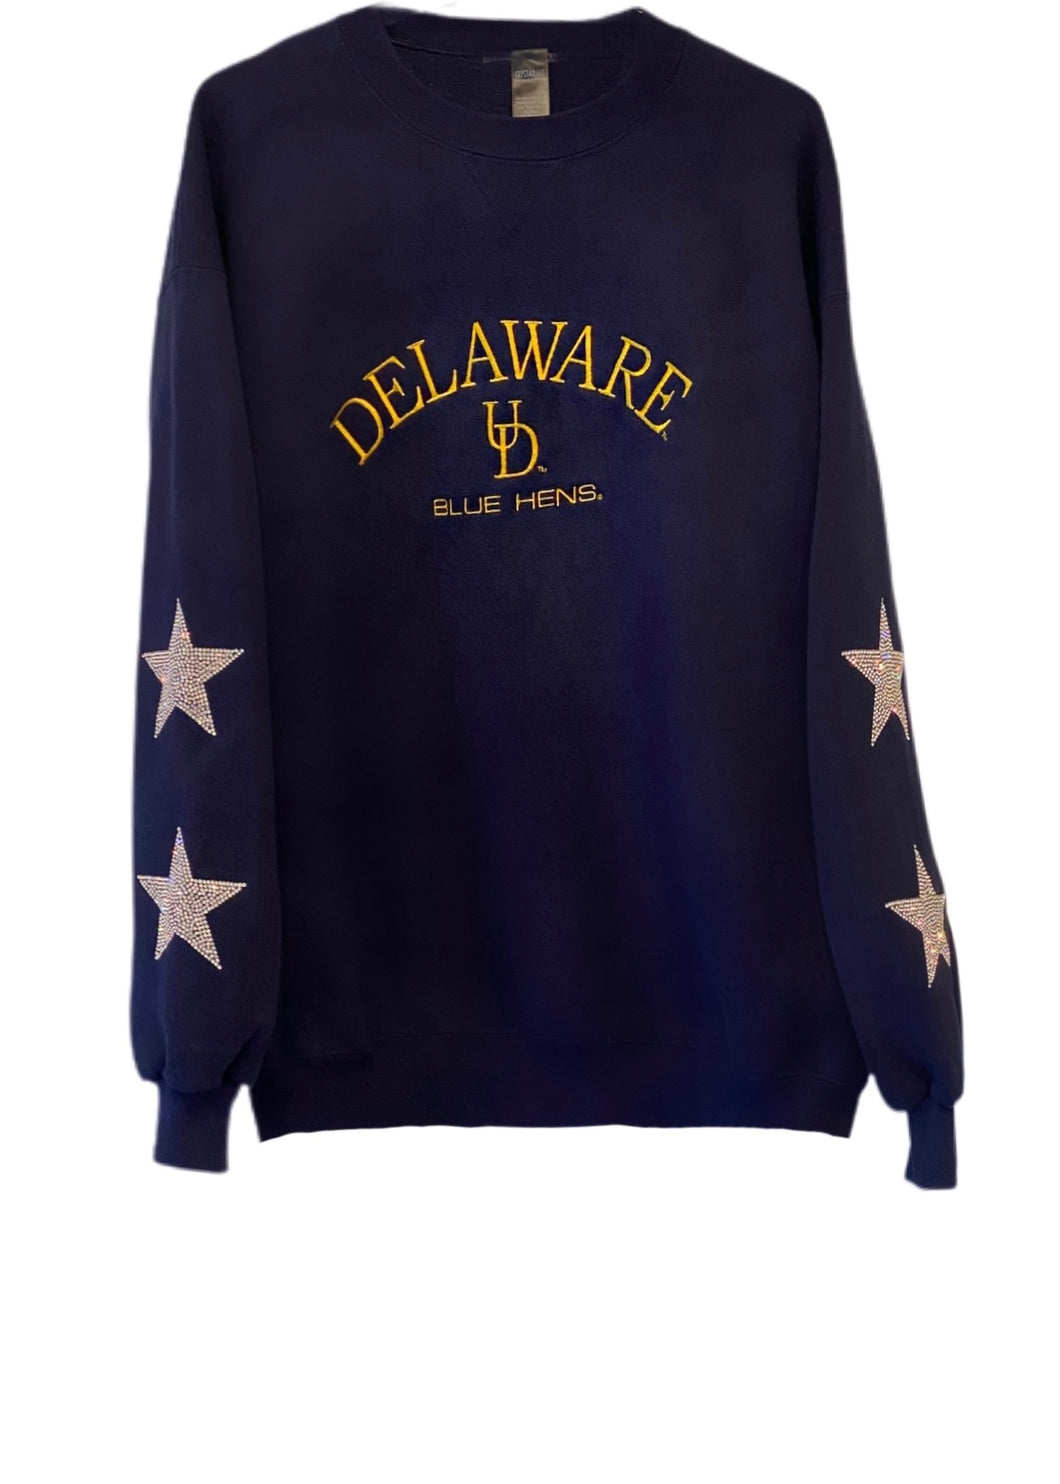 University of Delaware, One of a KIND Vintage Sweatshirt with Crystal Star Design